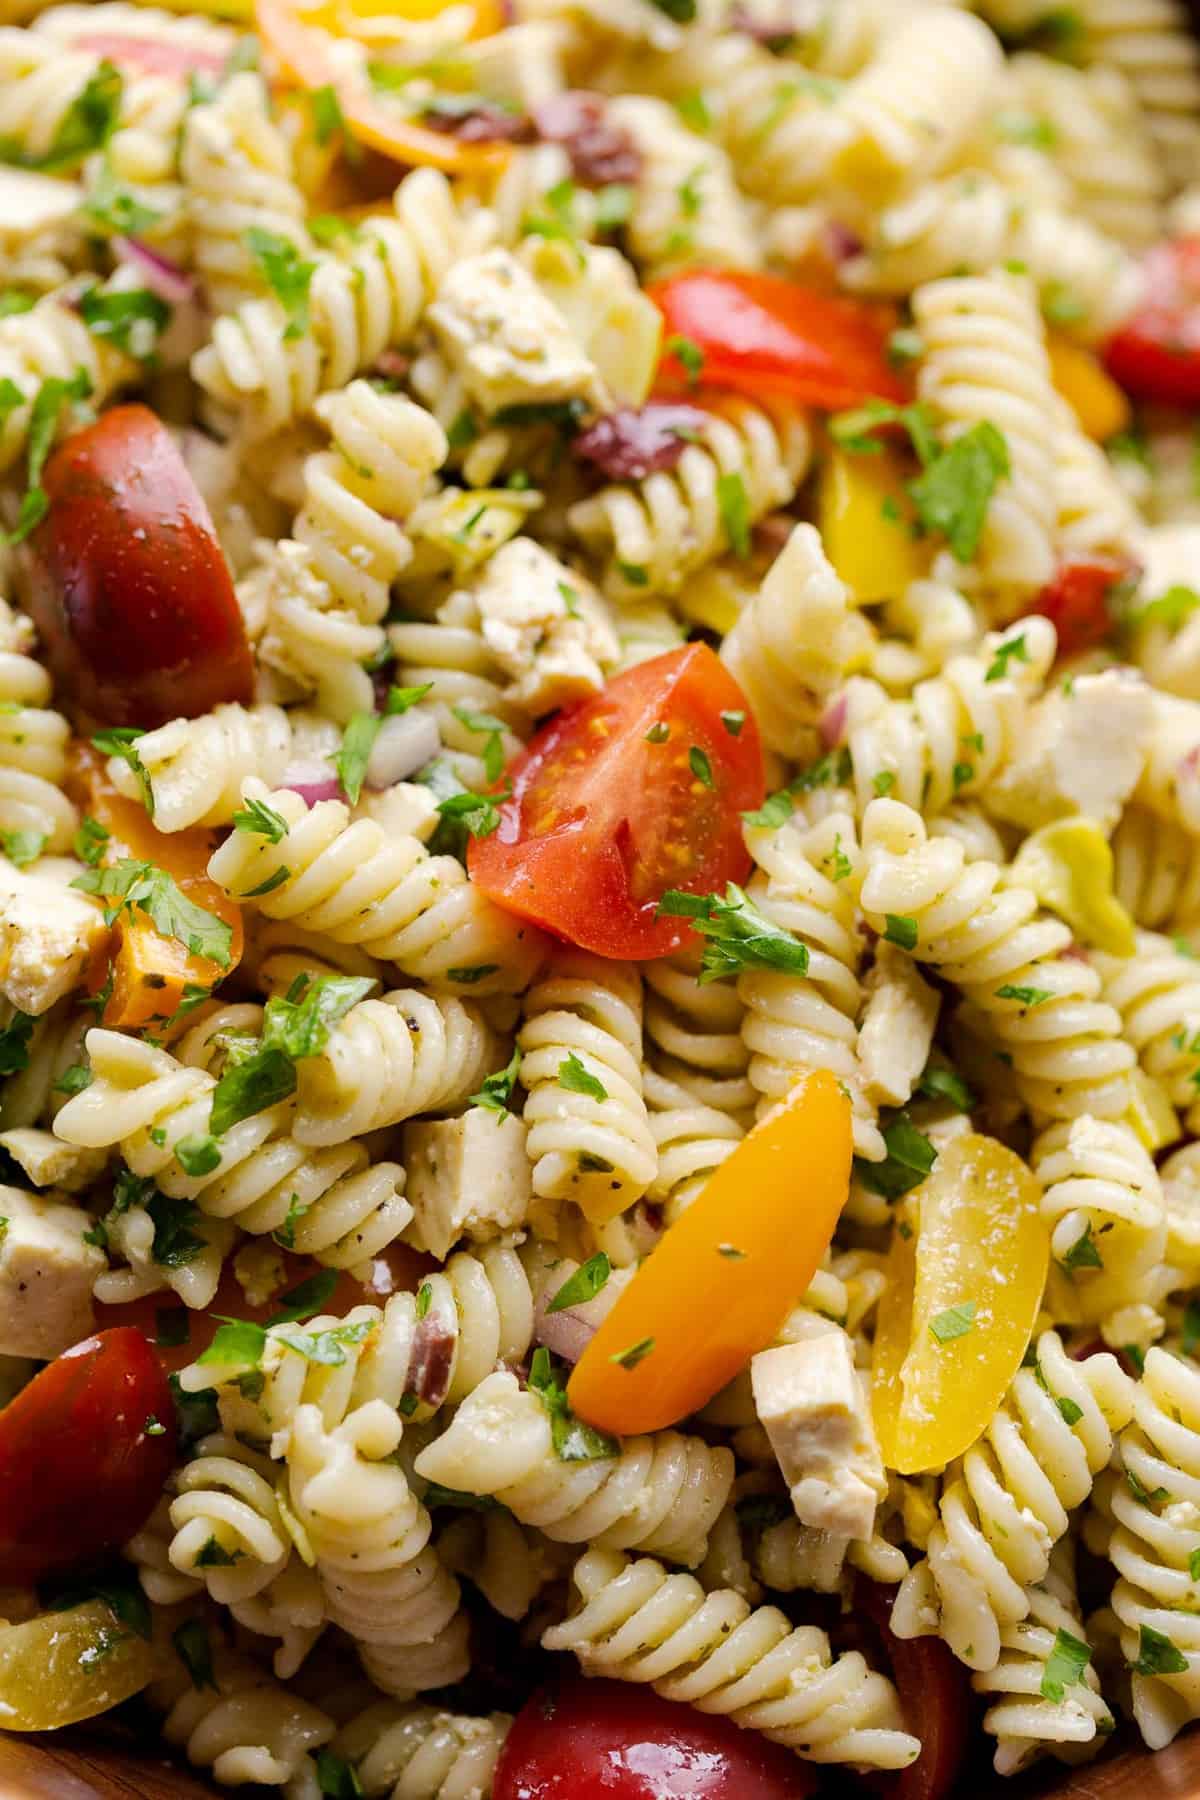 Close up of fusilli pasta, tomatoes, and herbs in vegan Italian pasta salad.